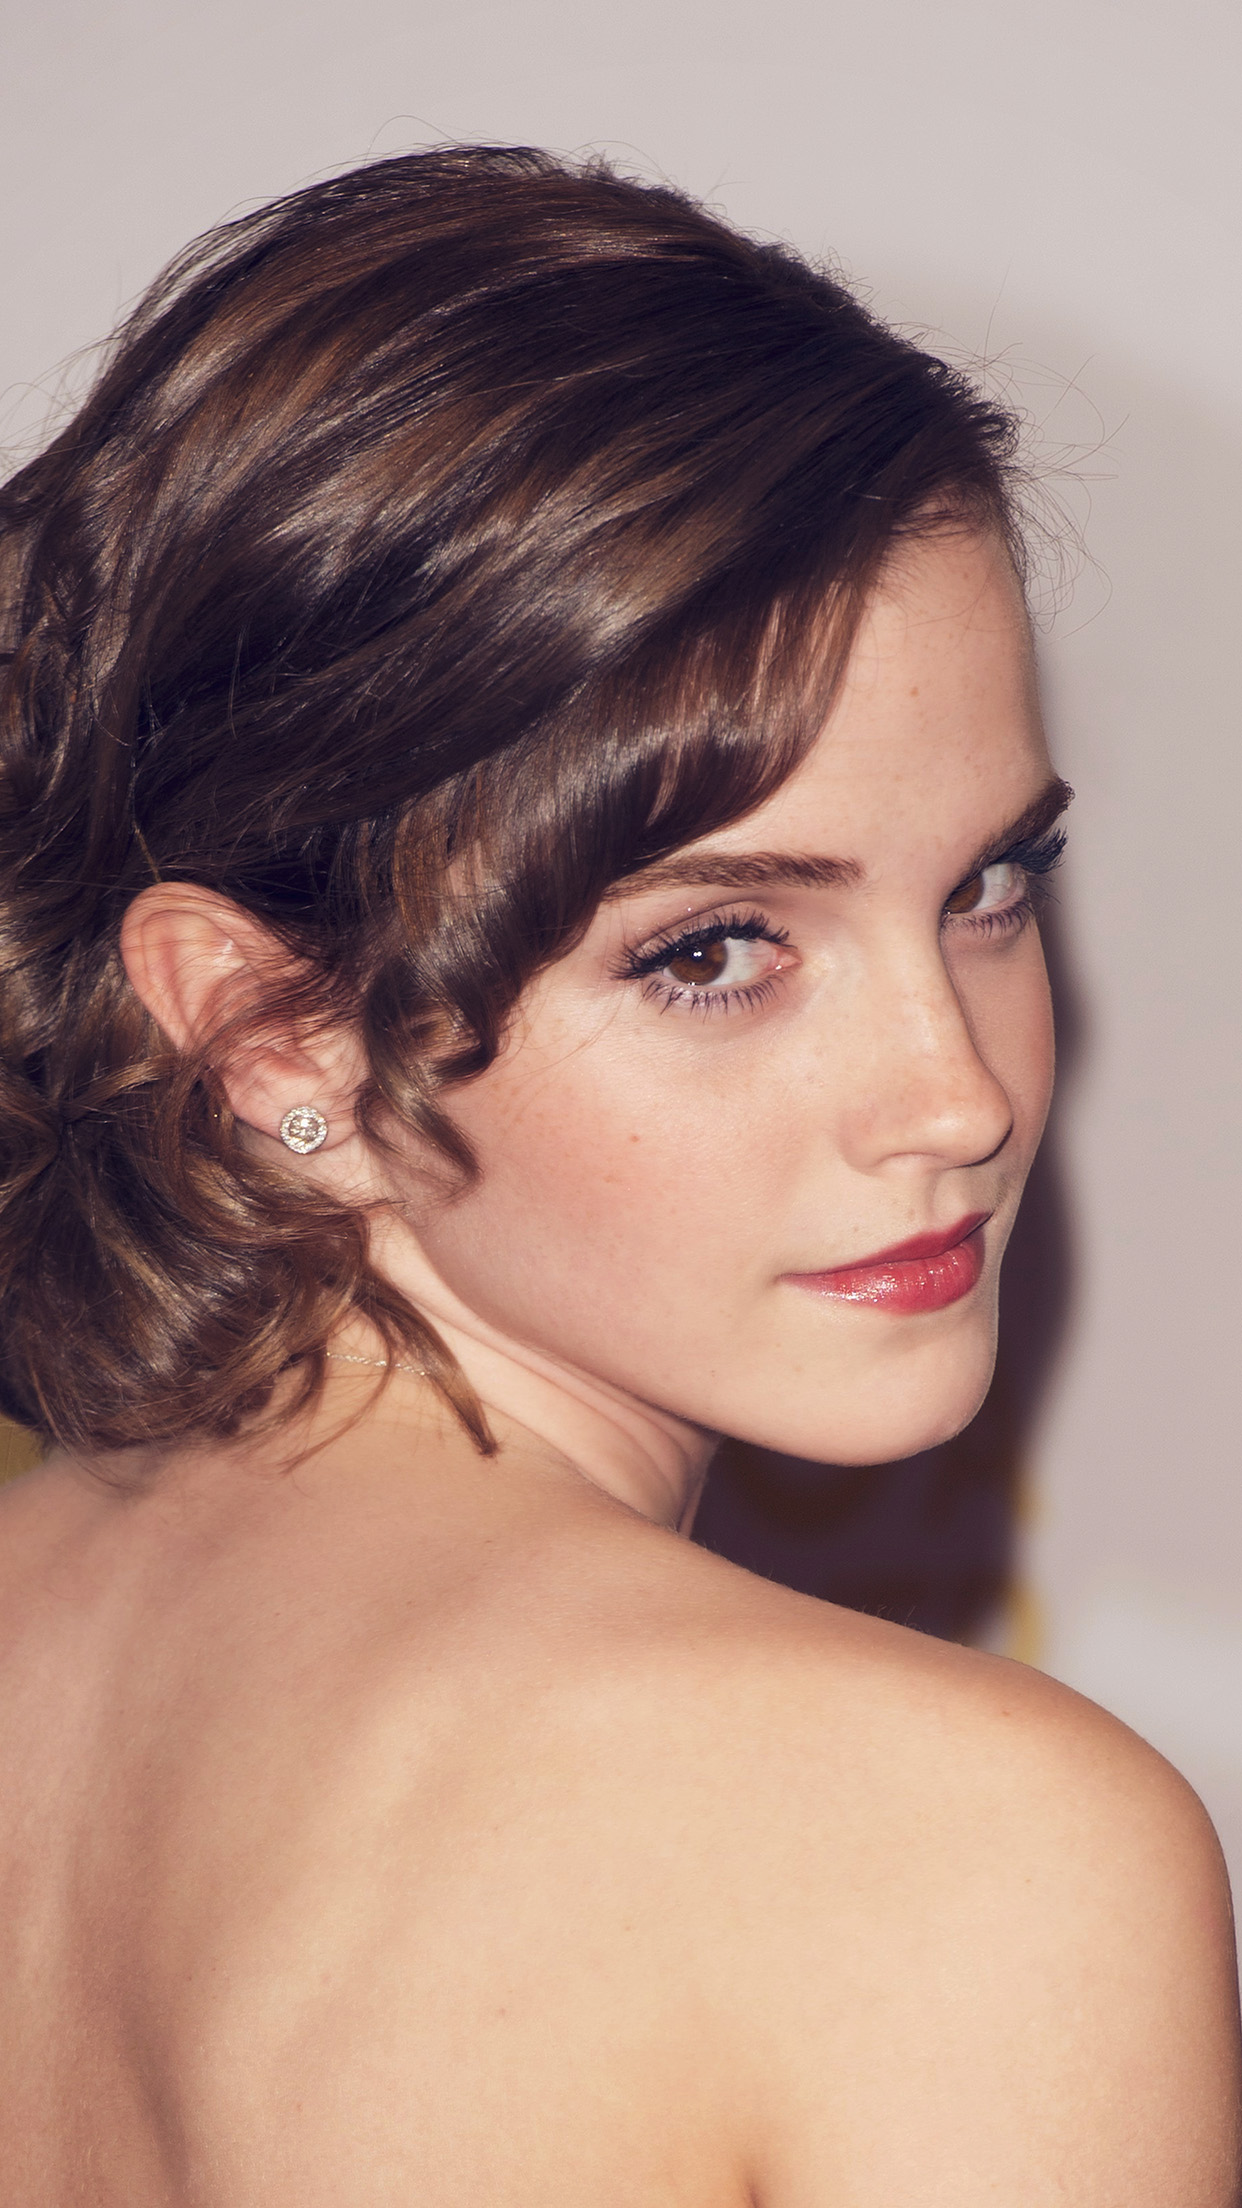 Emma Watson Beauty Actress Film Android wallpaper